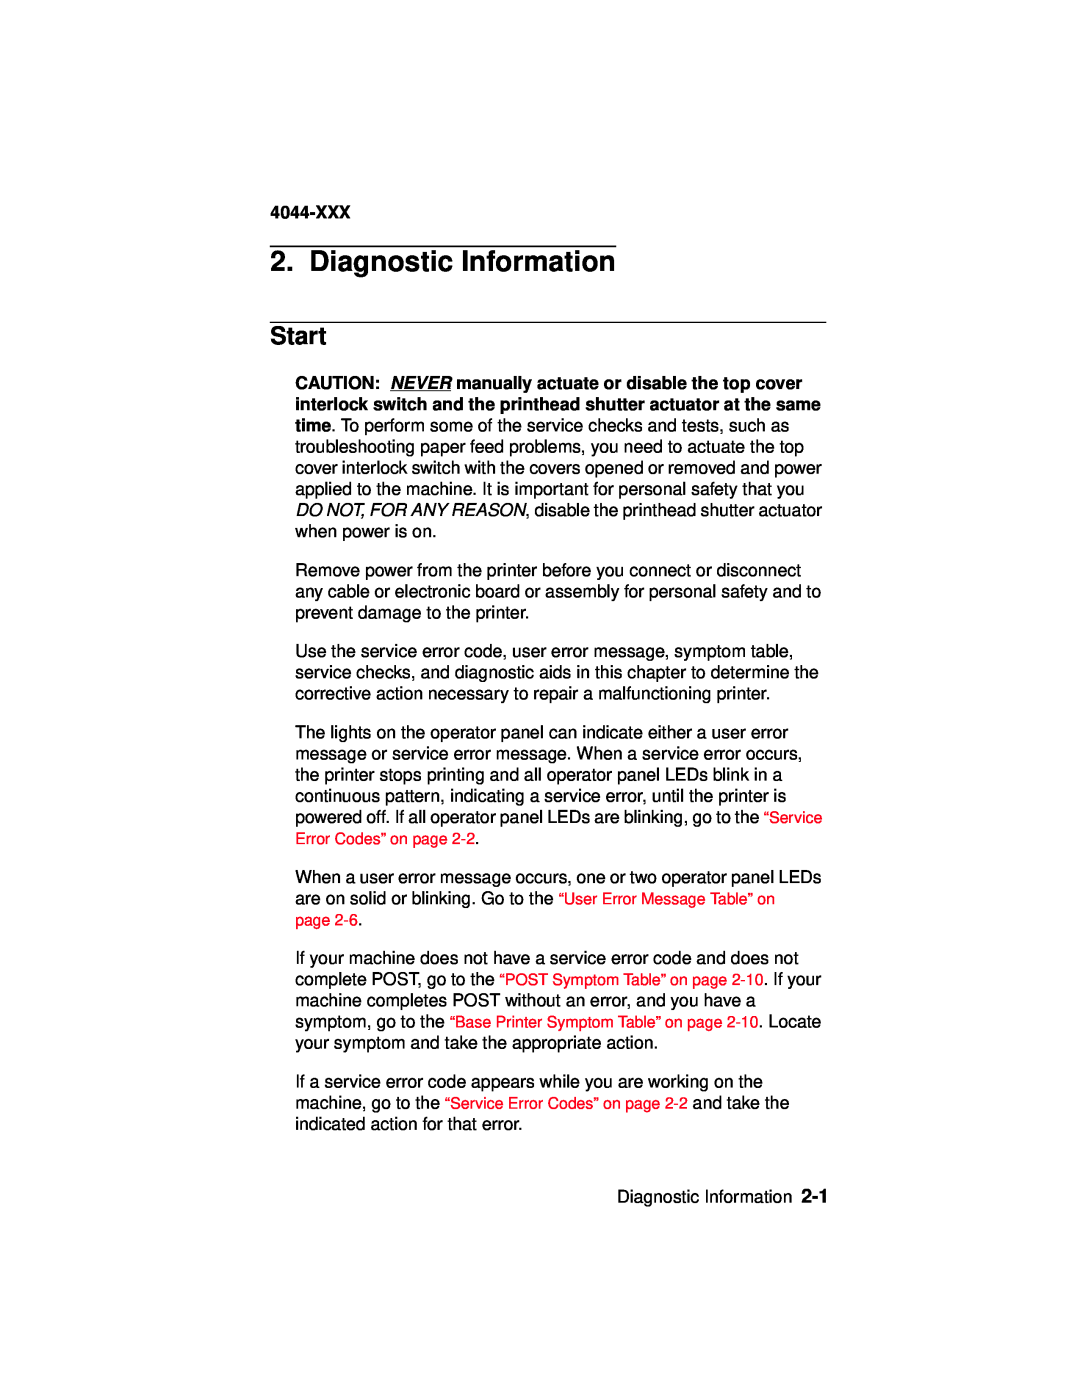 Lexmark E310 manual Diagnostic Information, Start, 4044-XXX 